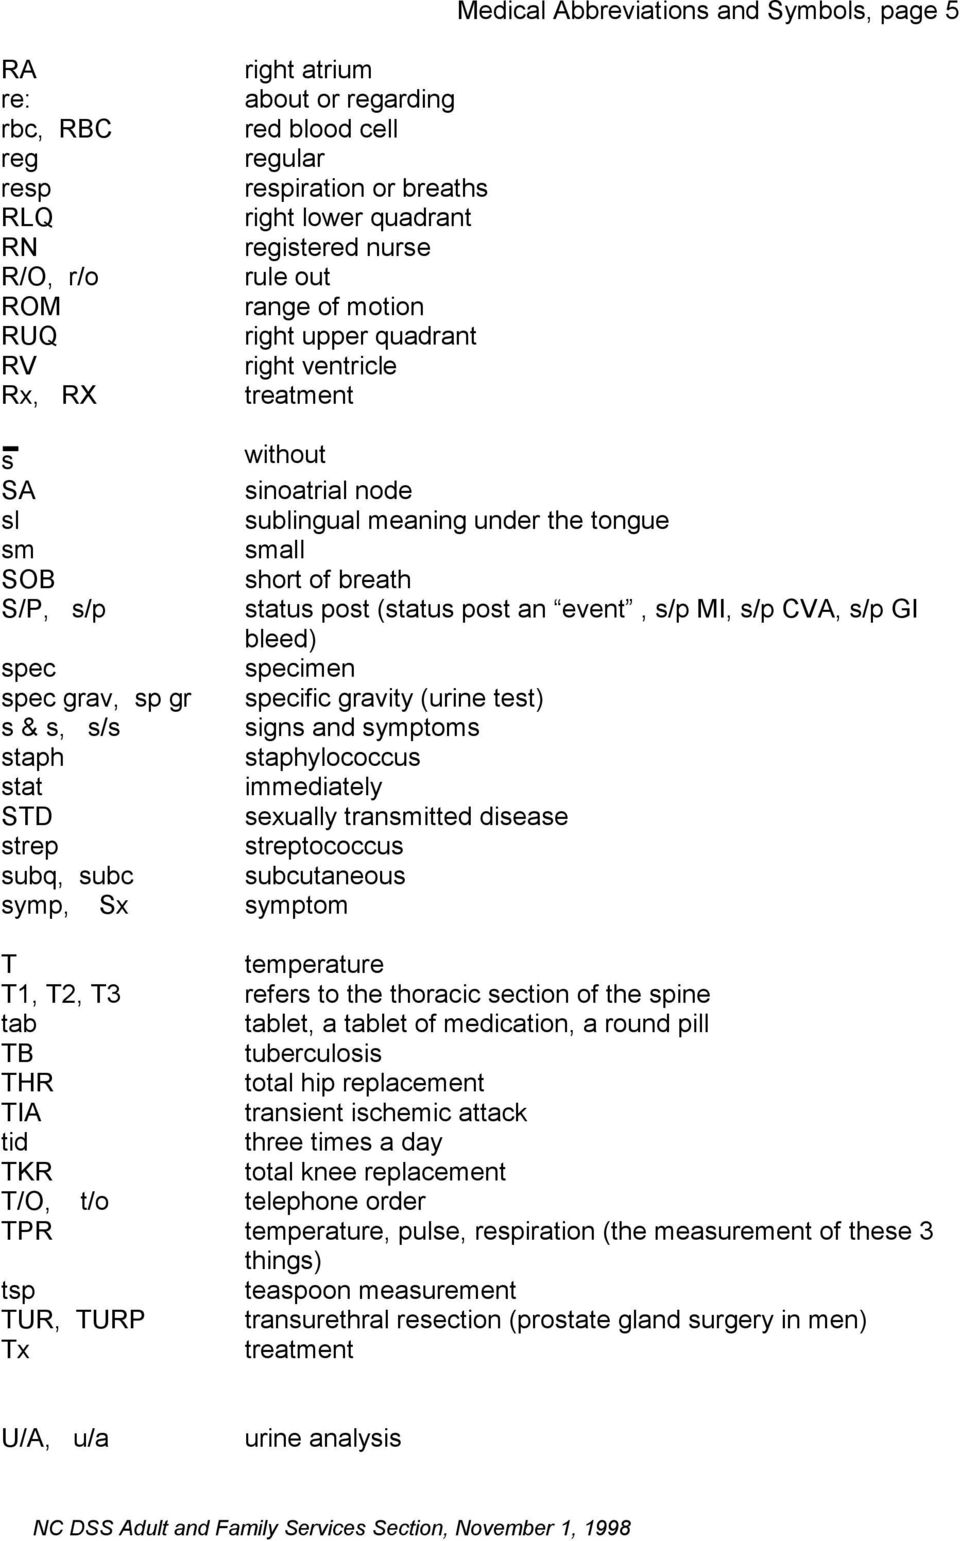 medical abbreviations and symbols Within Medical Terminology Abbreviations Worksheet